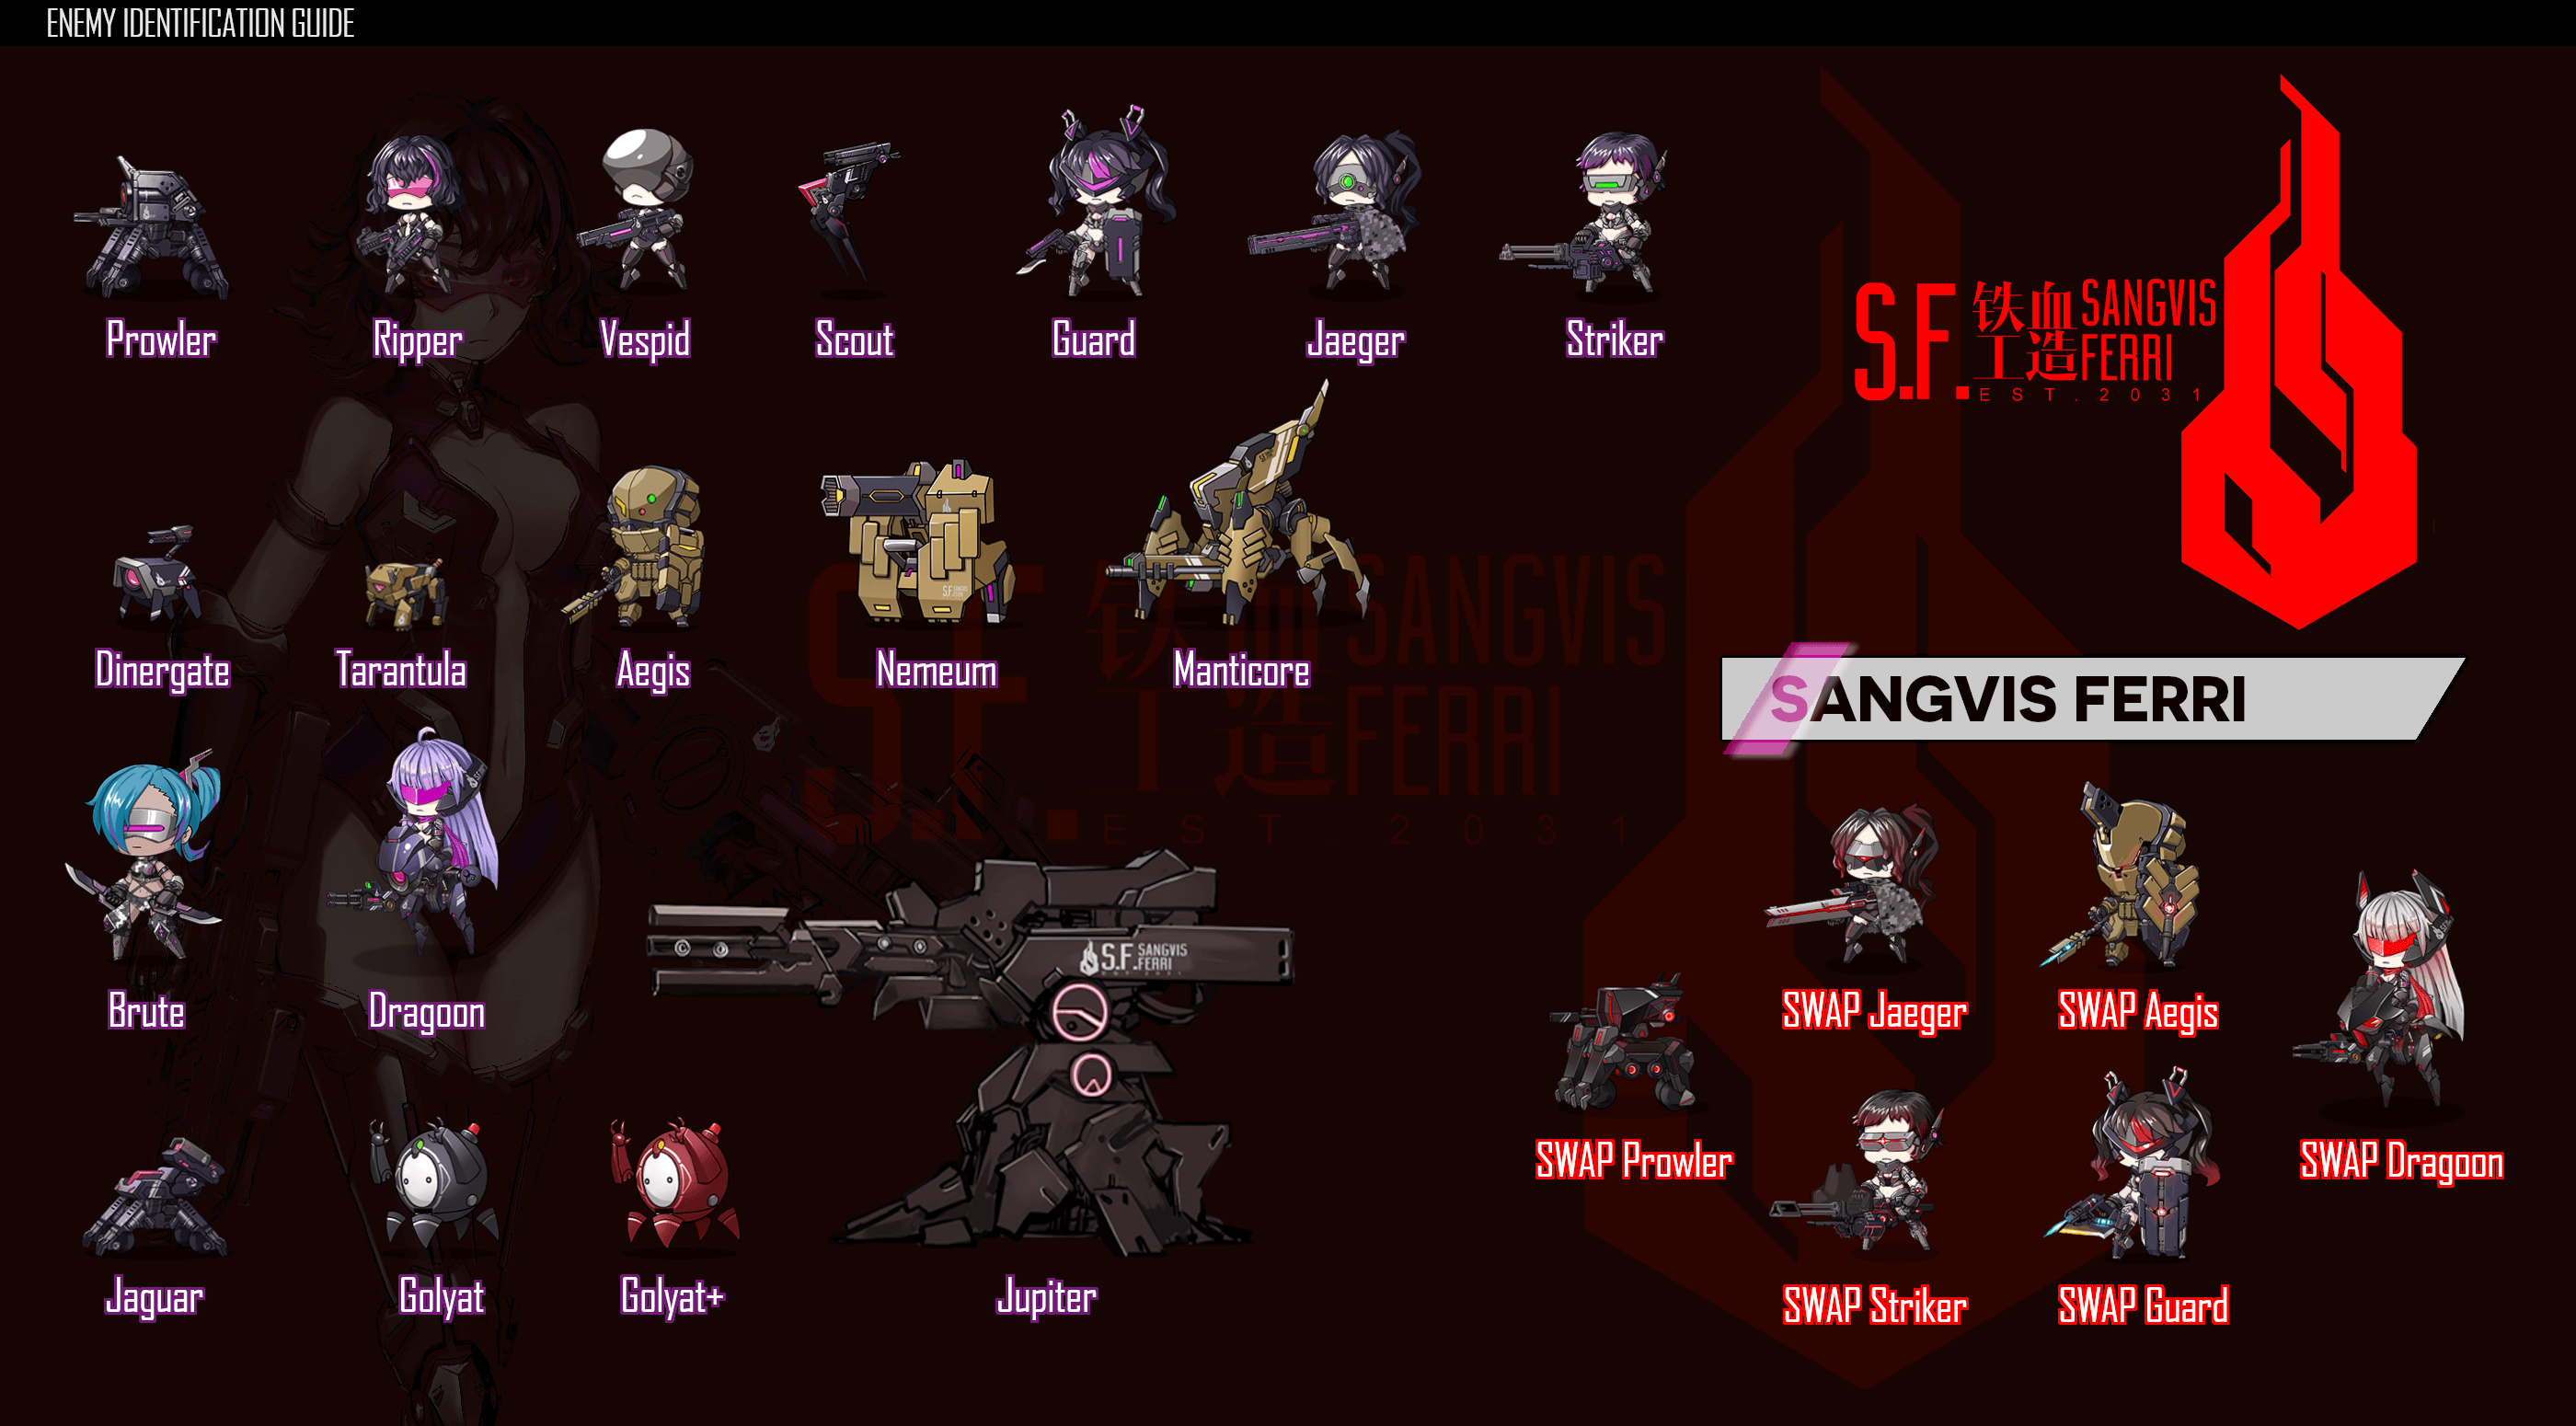 Enemy Infographic (Sangvis Ferri), by Arcus from GFLCorner